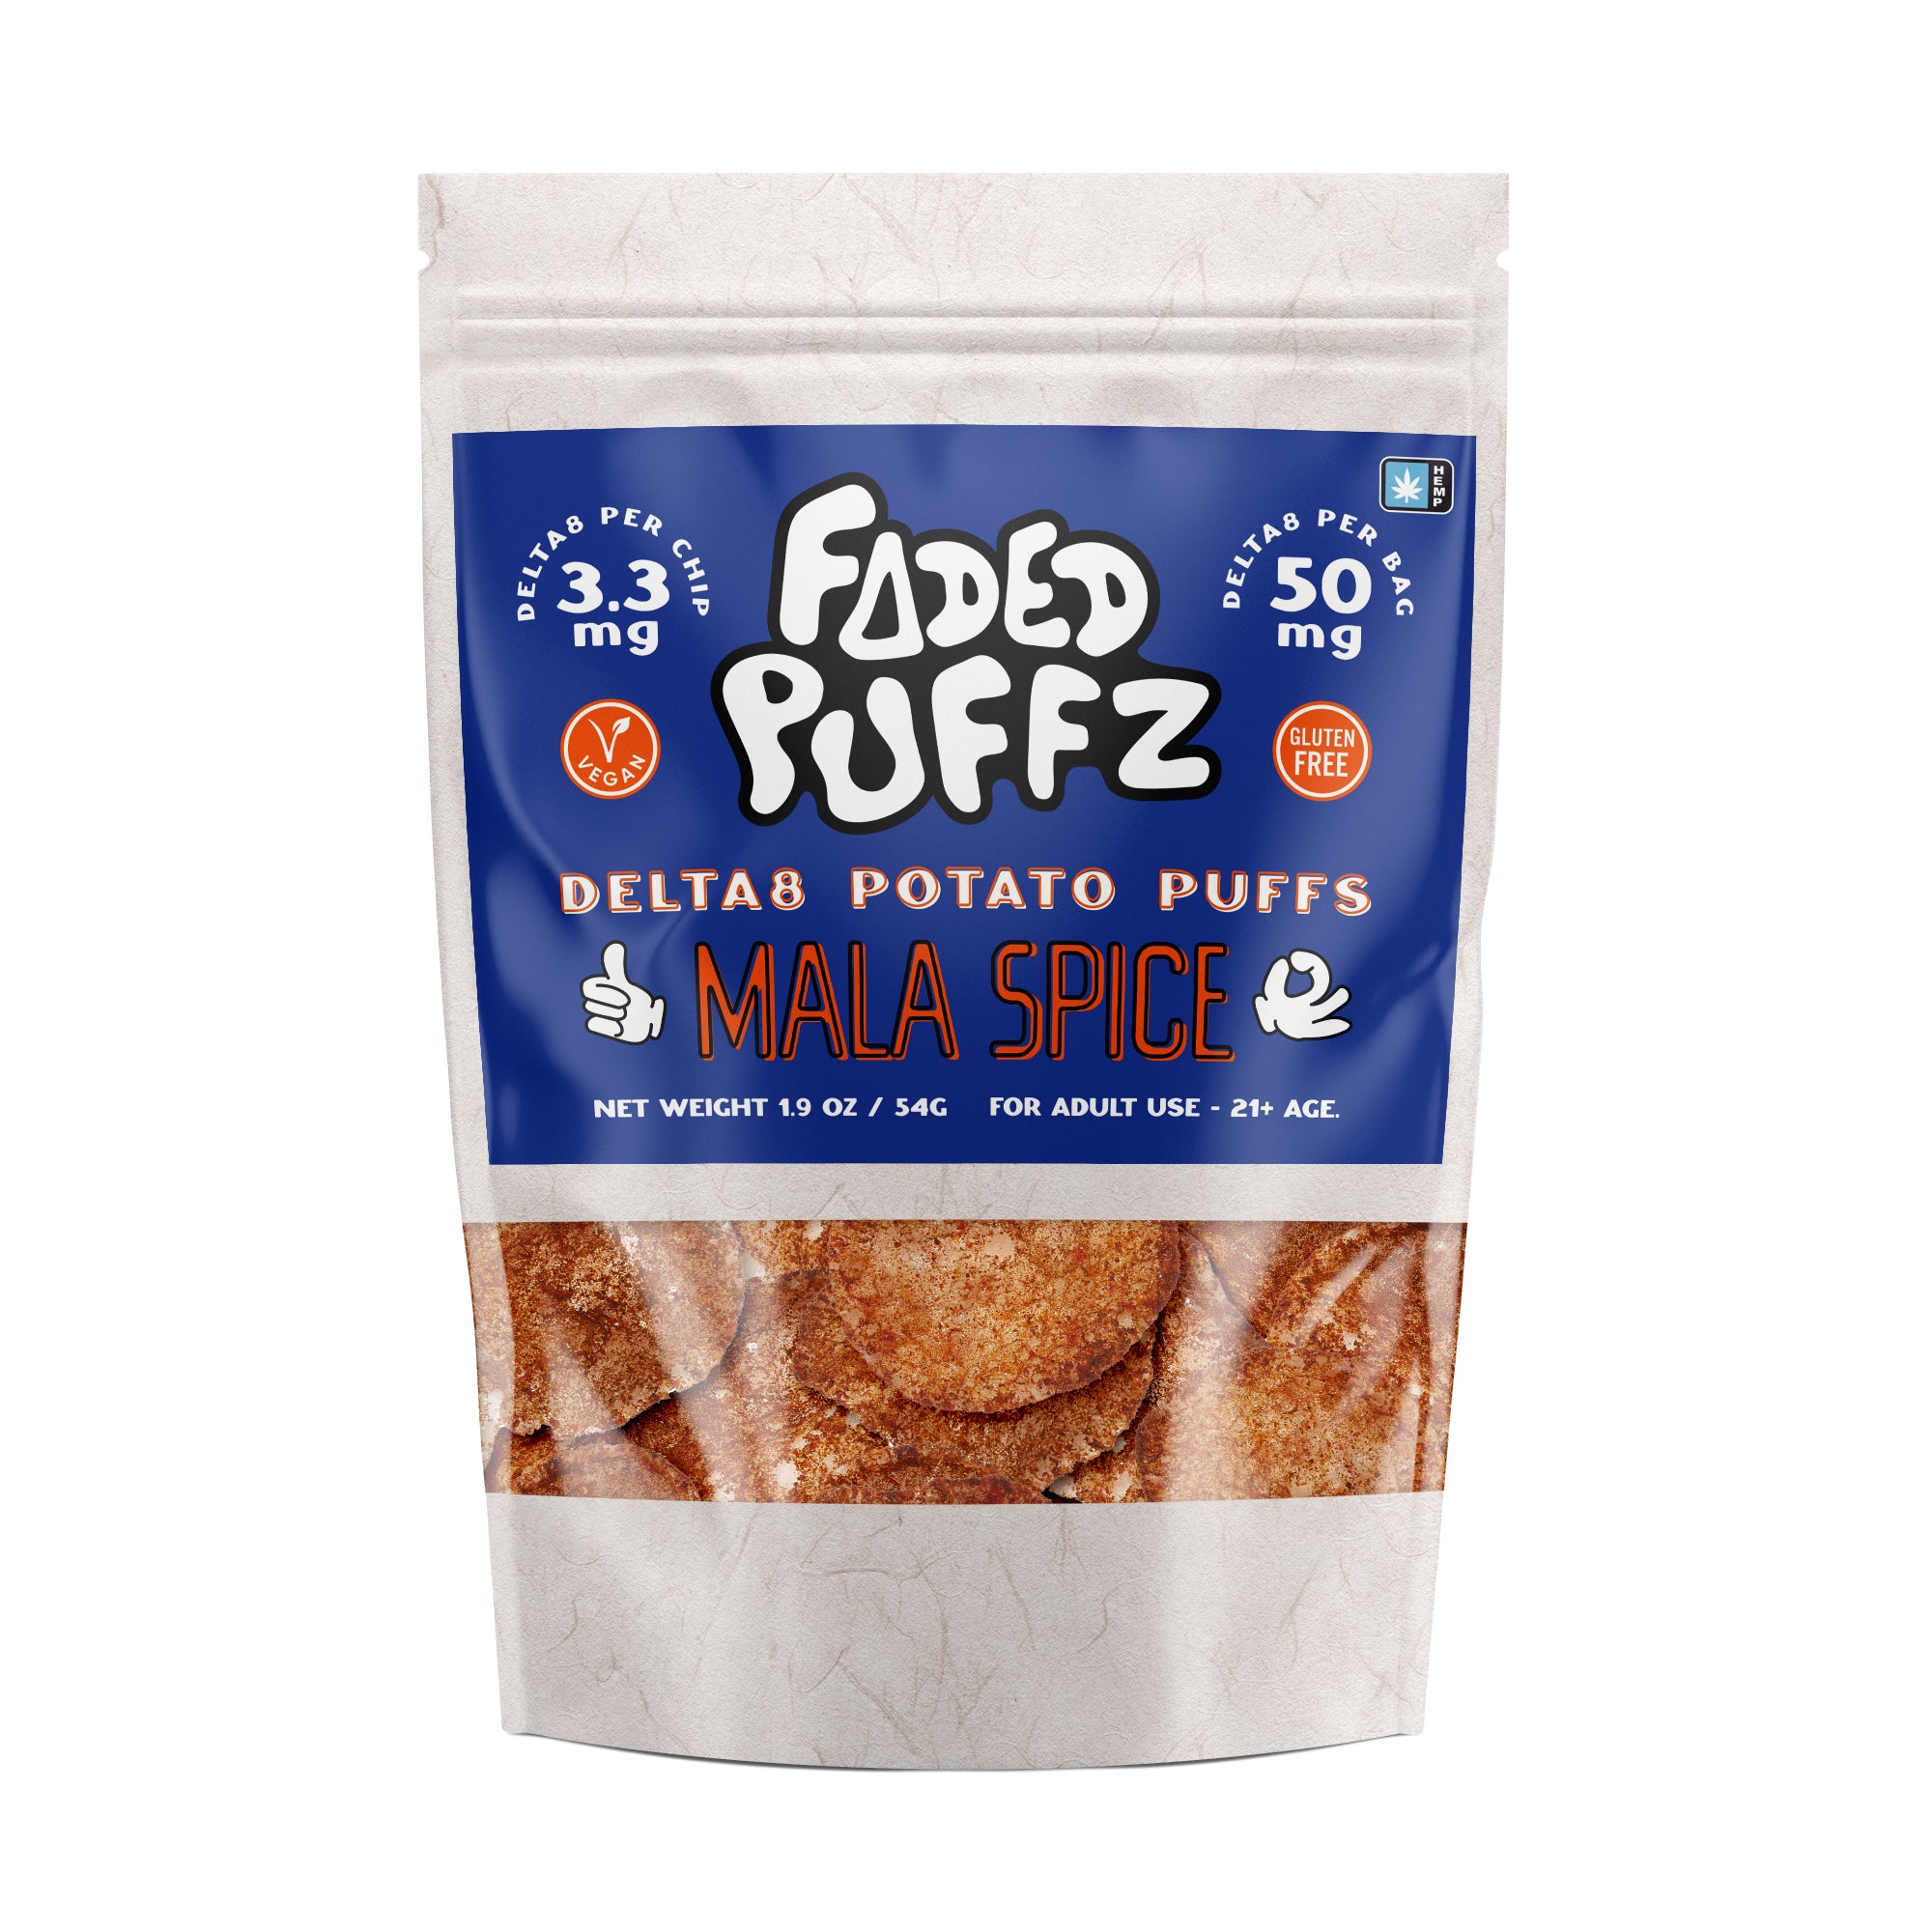 Faded Puffz Delta8 Potato Chips 50mg - Mala Spice (25ct)